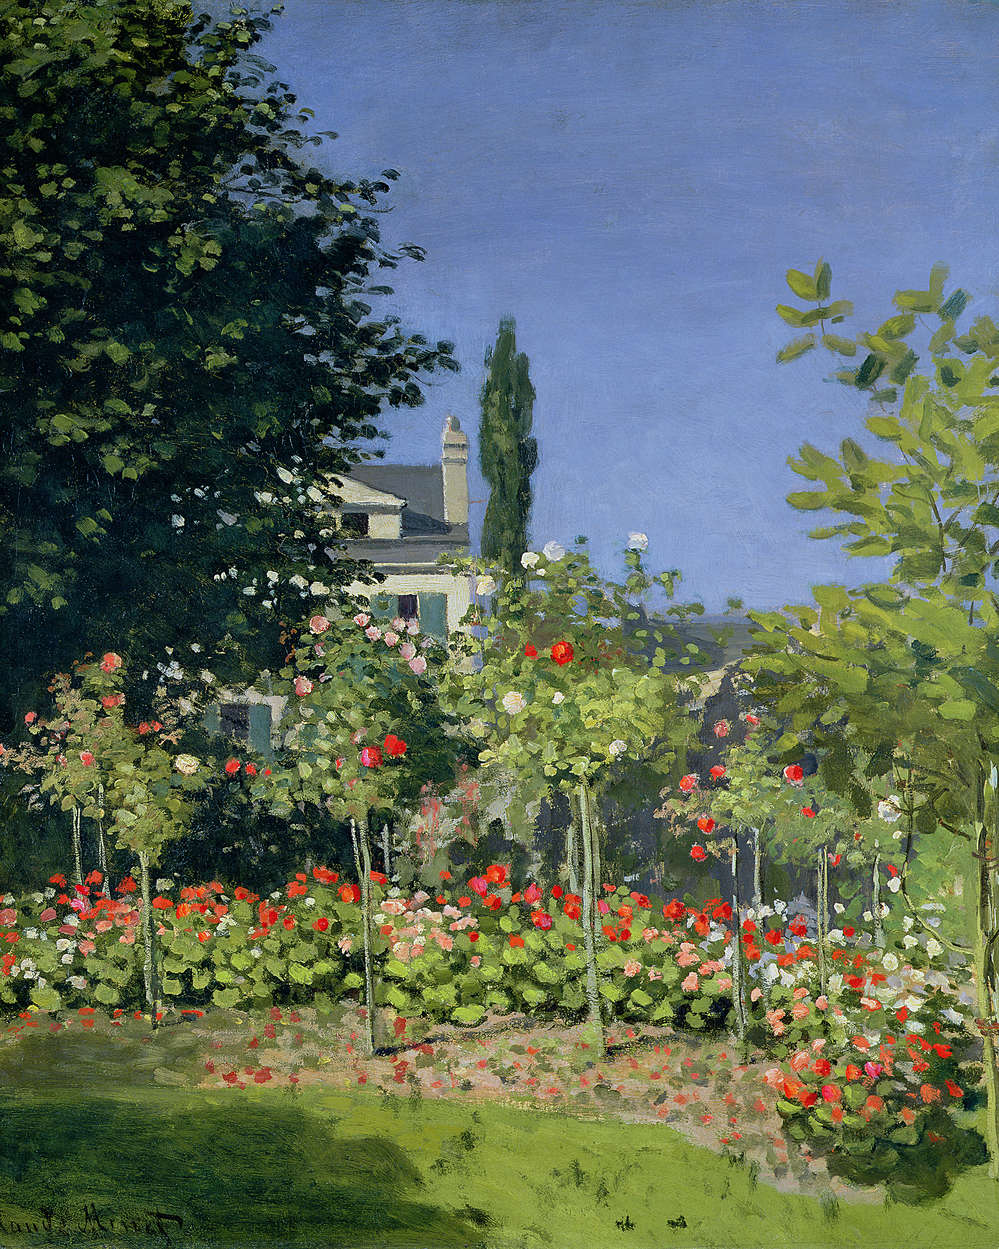             Fotomurali "Giardino fiorito a SainteAdresse" di Claude Monet
        